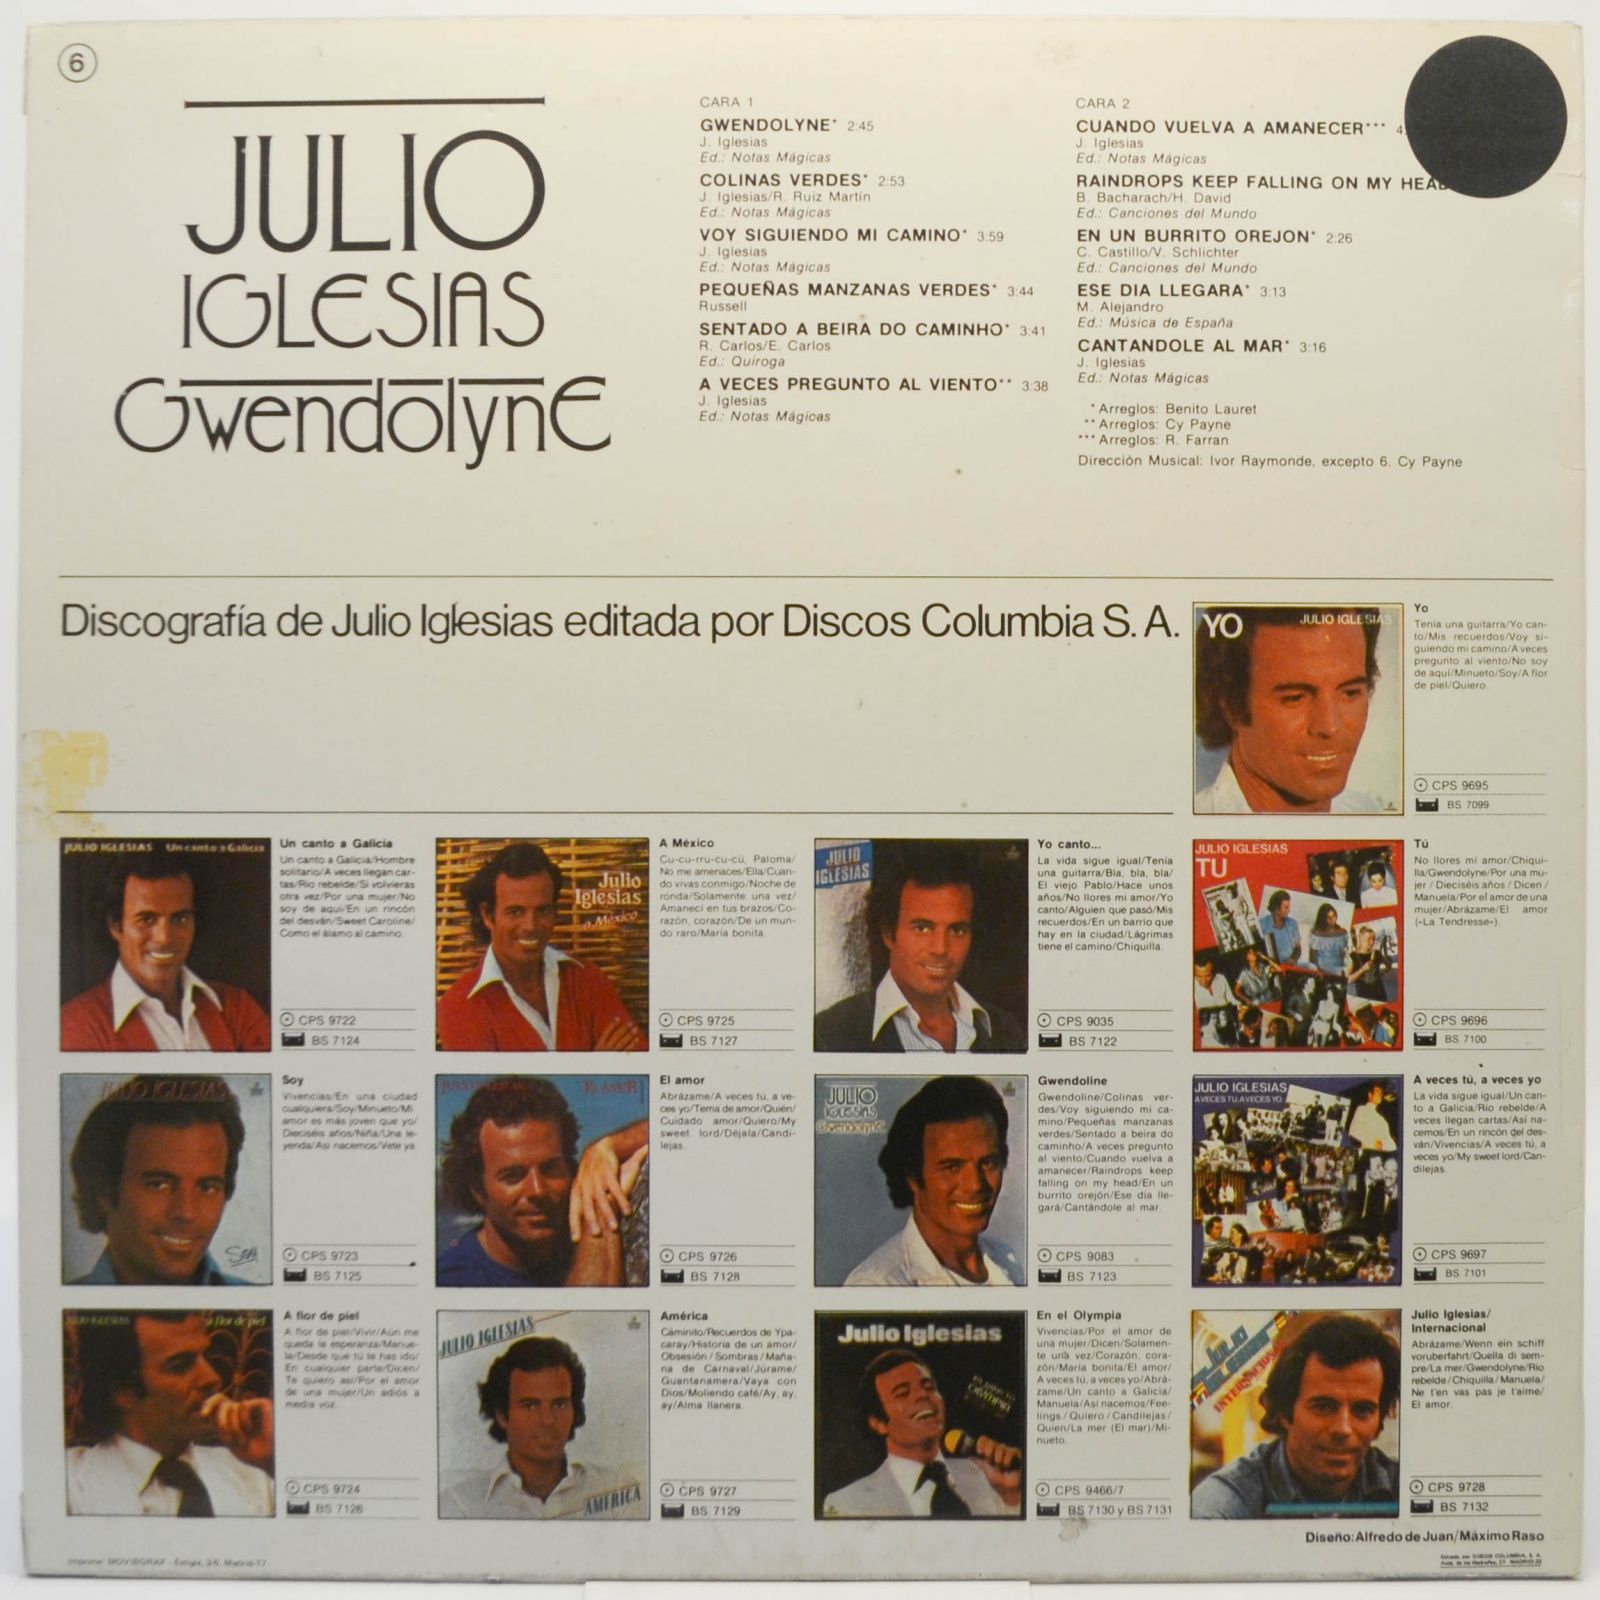 Julio Iglesias — Gwendolyne (Spain), 1970